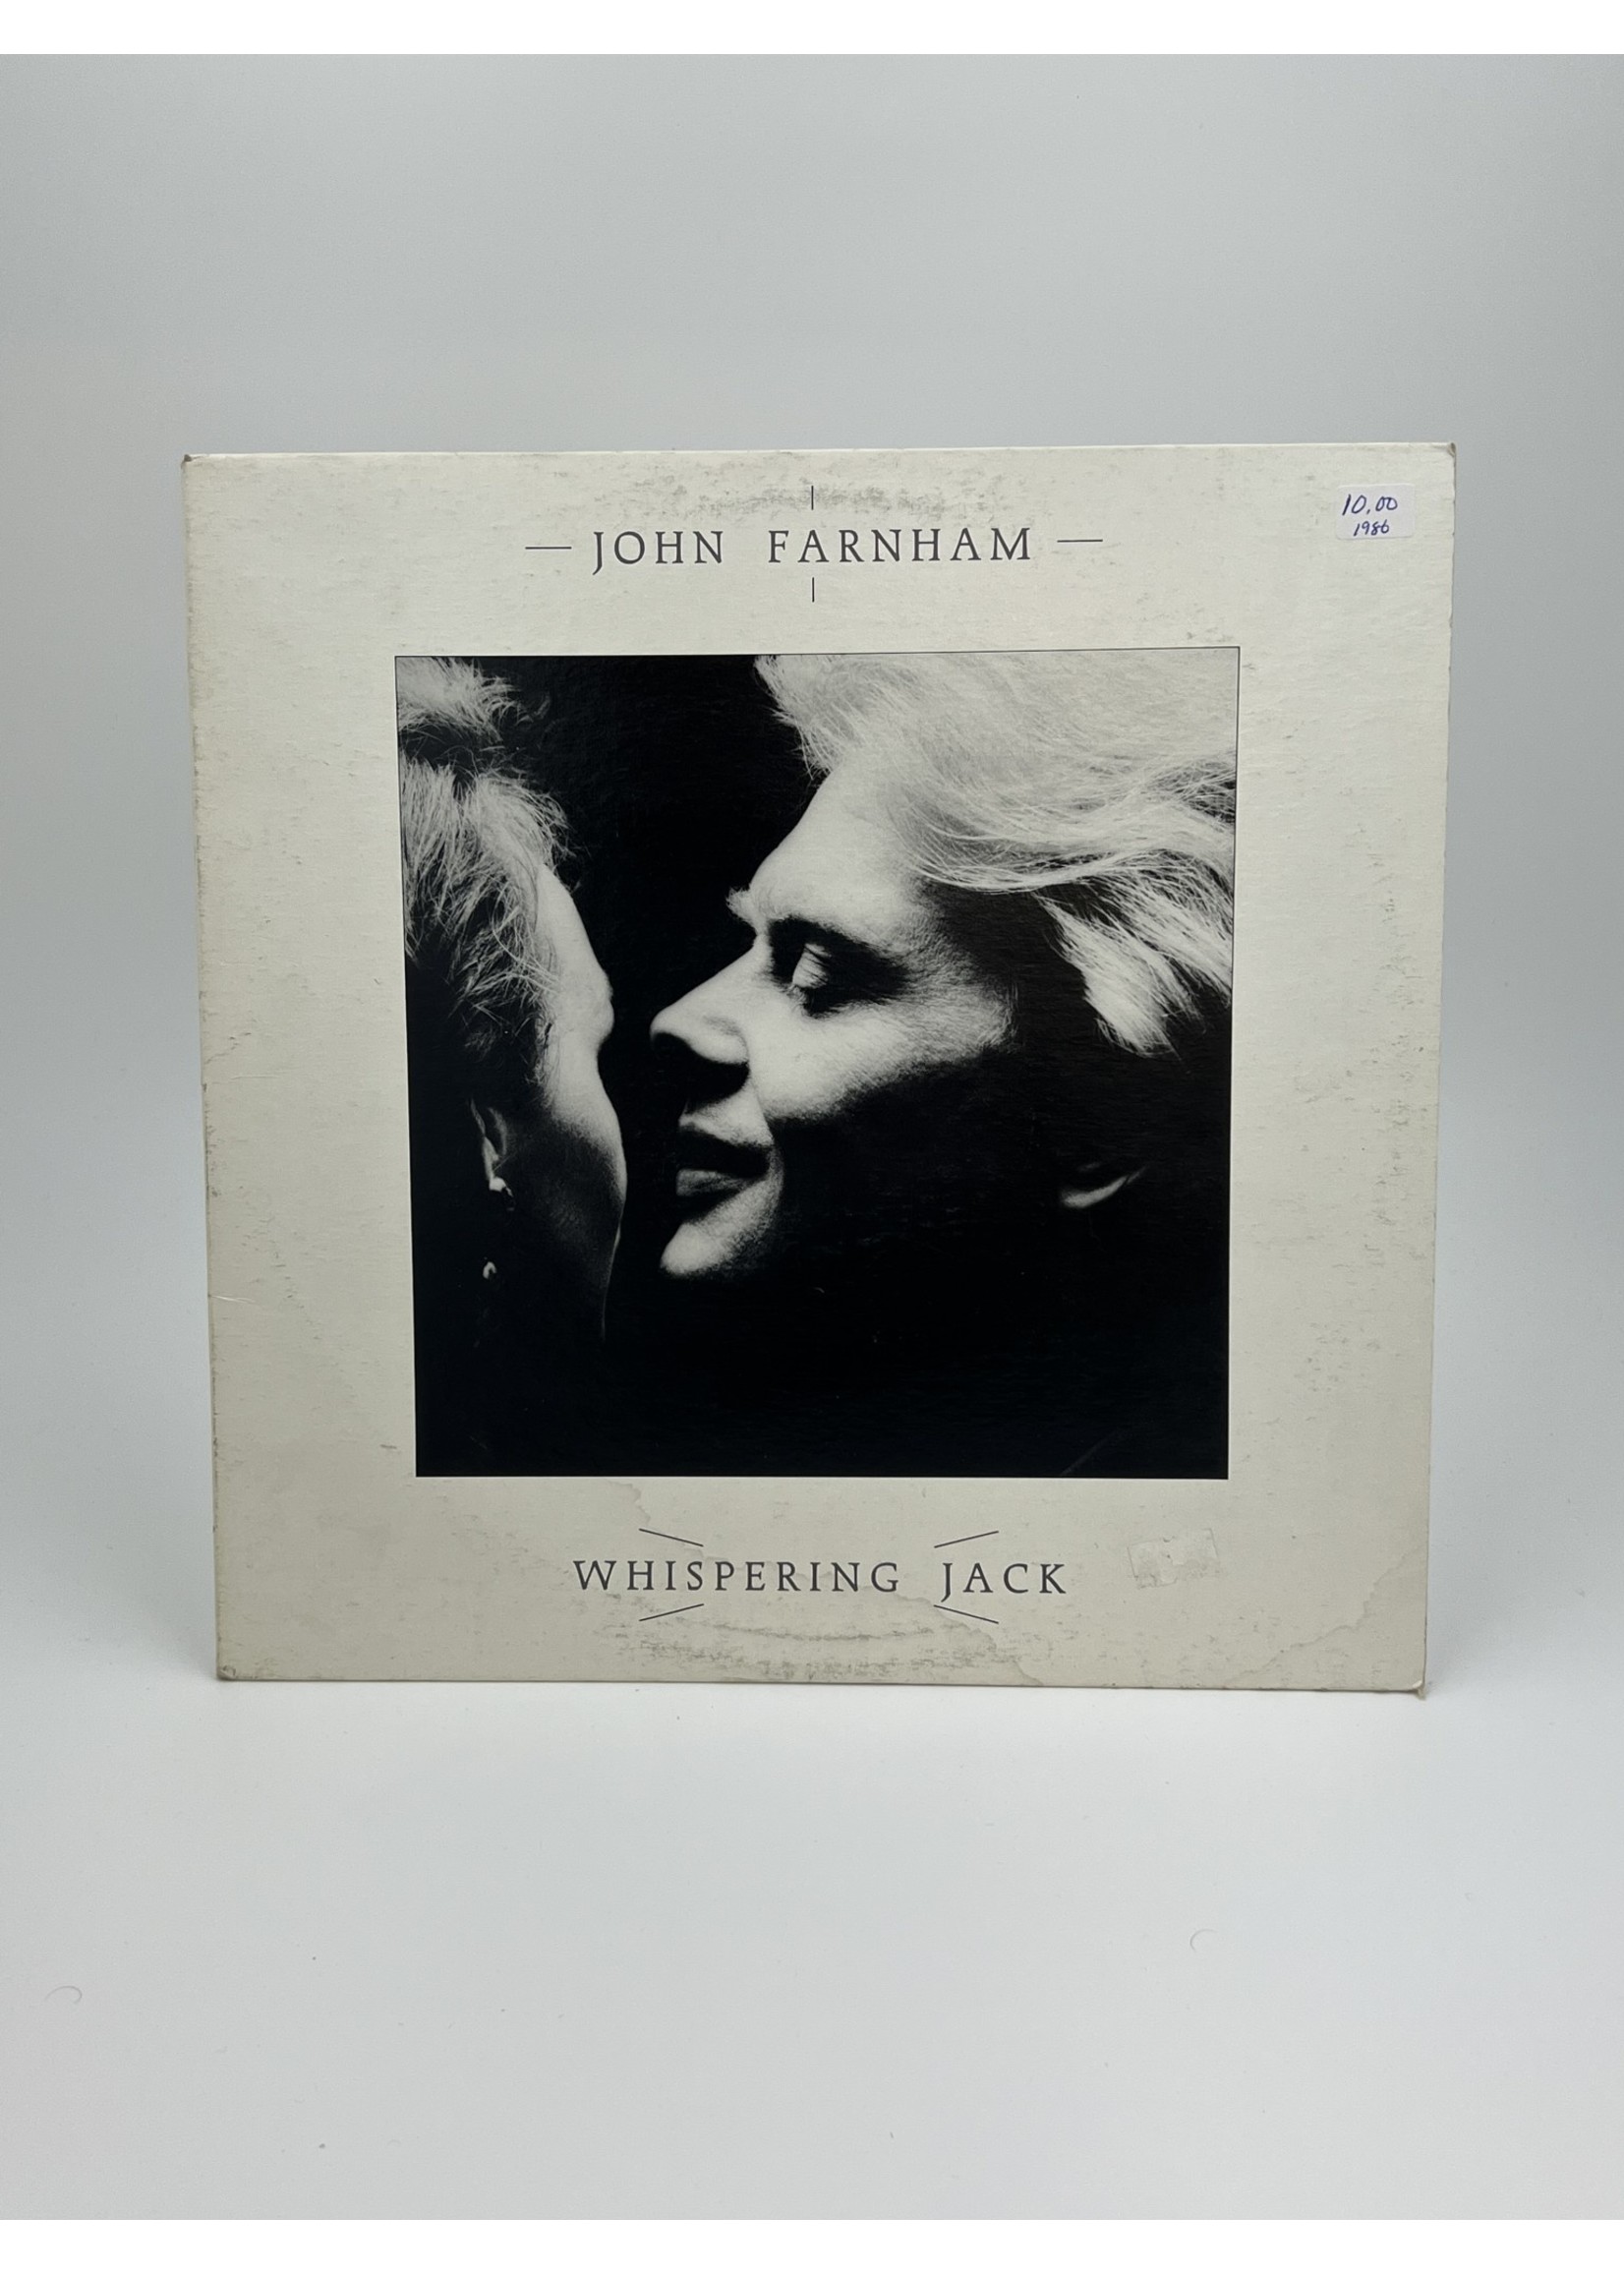 LP John Farnham Whispering Jack LP Record